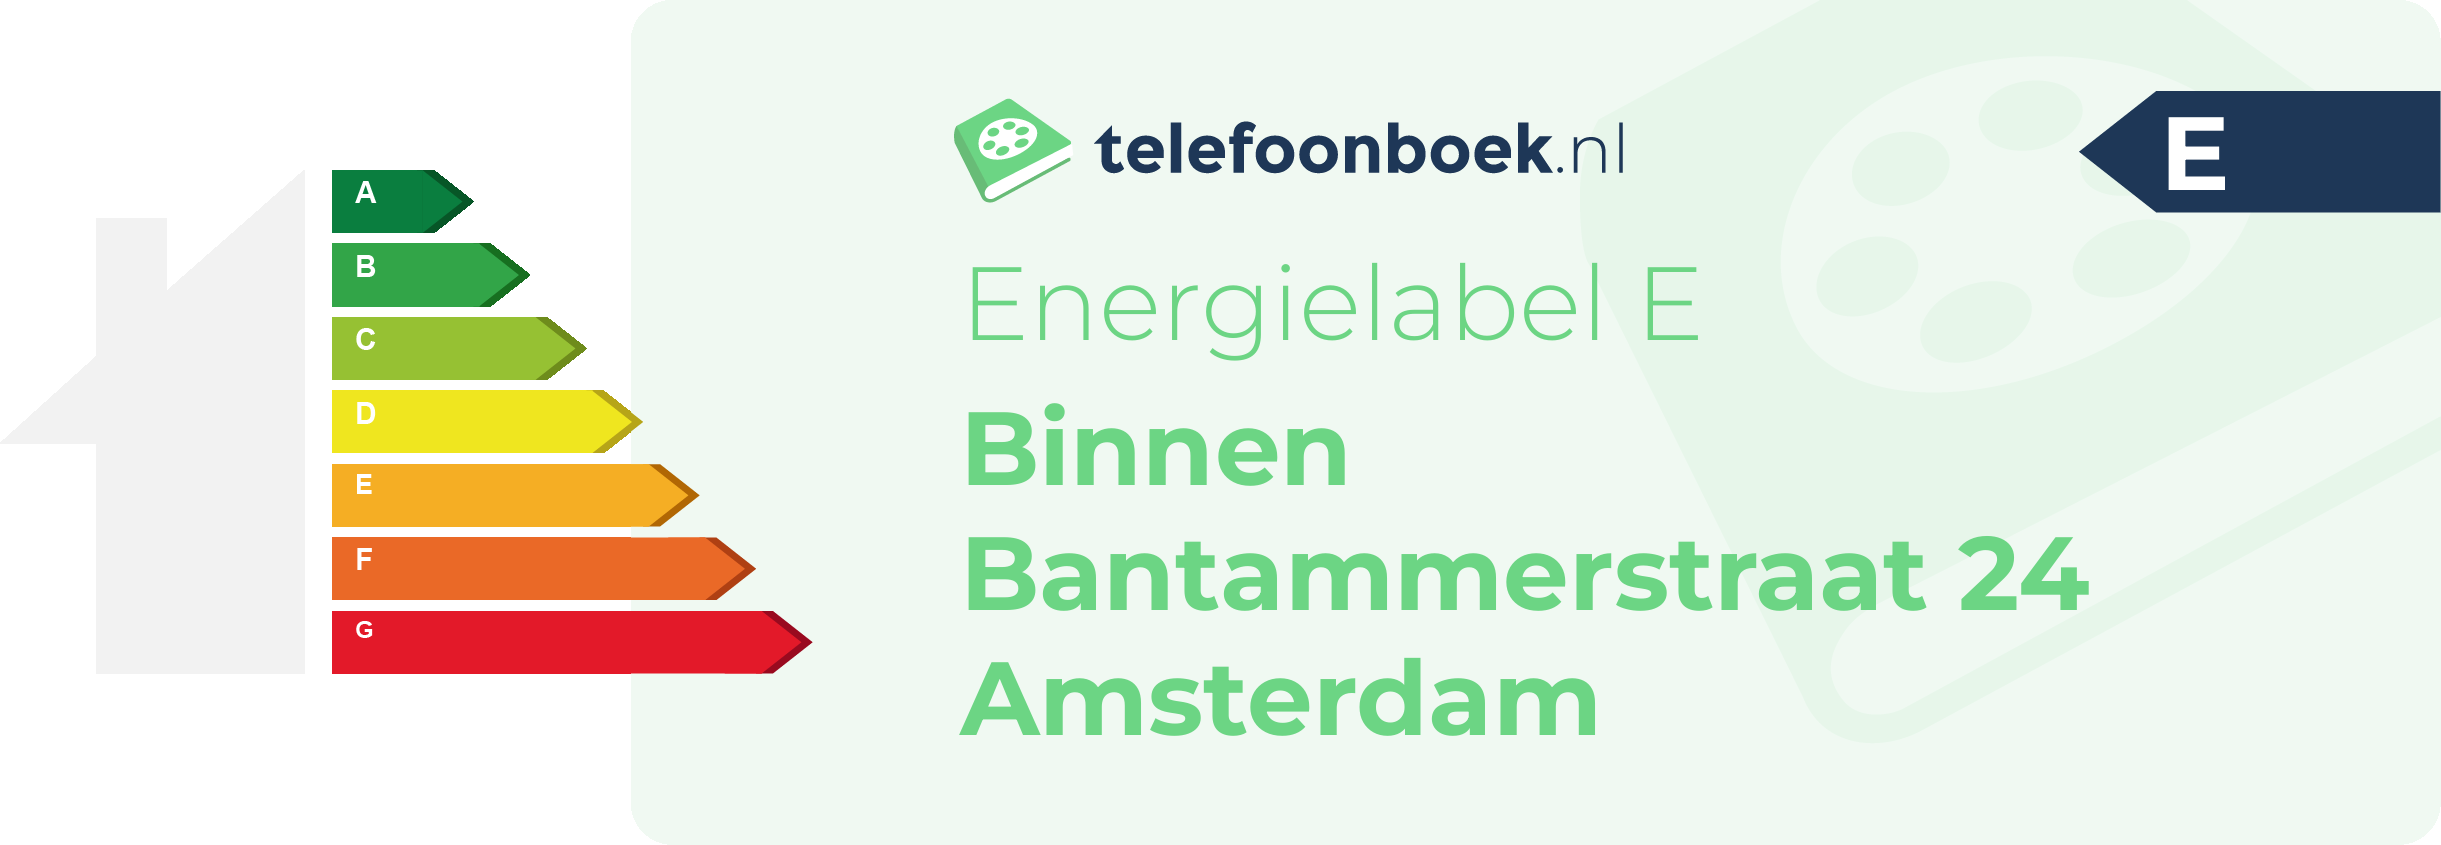 Energielabel Binnen Bantammerstraat 24 Amsterdam